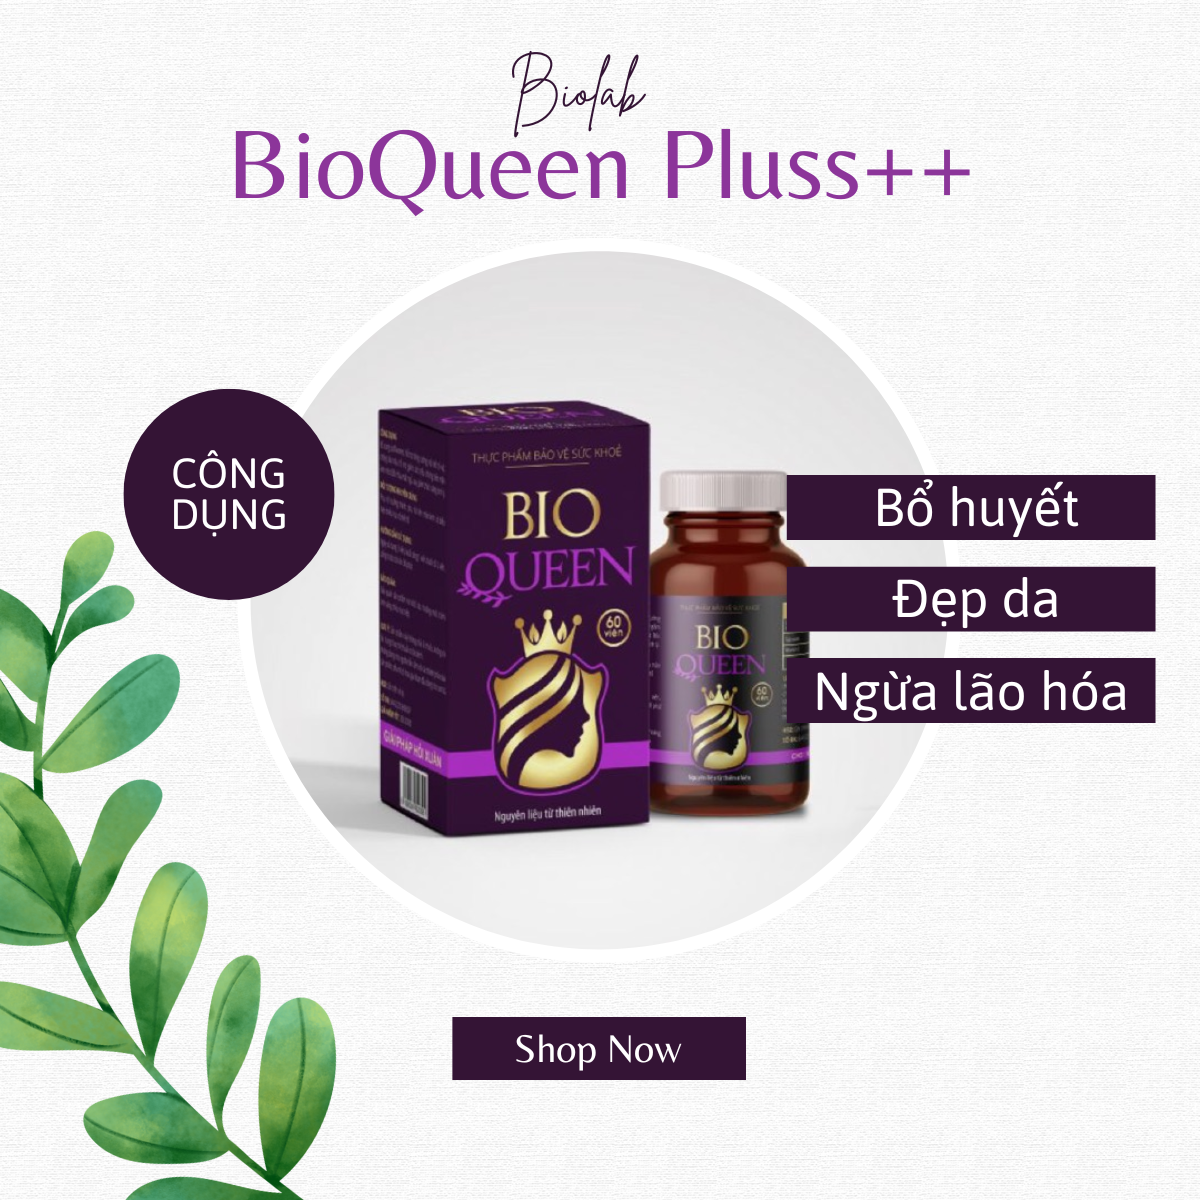 BioQueen Pluss++ giúp bổ huyết